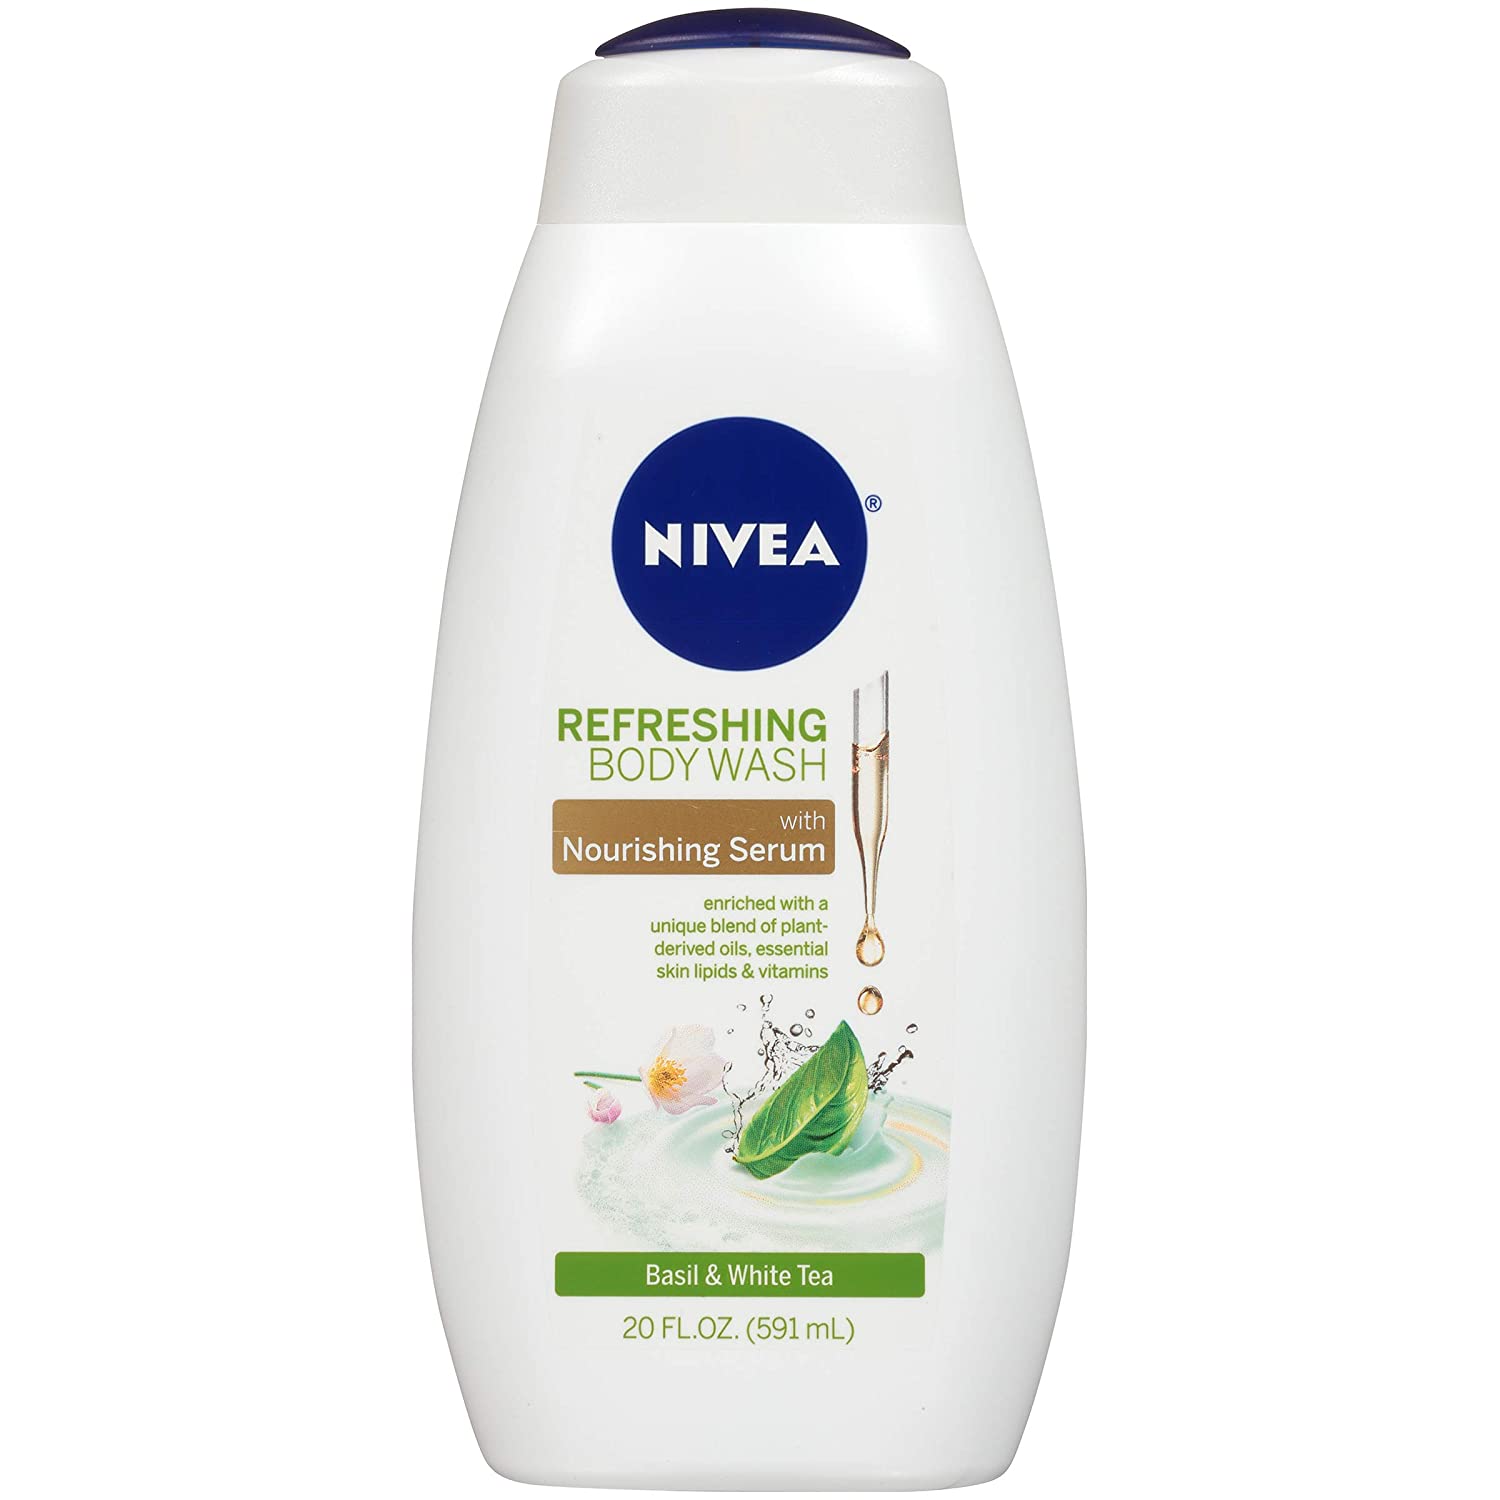 20-Oz NIVEA Refreshing Body Wash w/ Nourishing Serum (Basil & White Tea) $3.35 w/ S&S + Free Shipping w/ Prime or on $25+